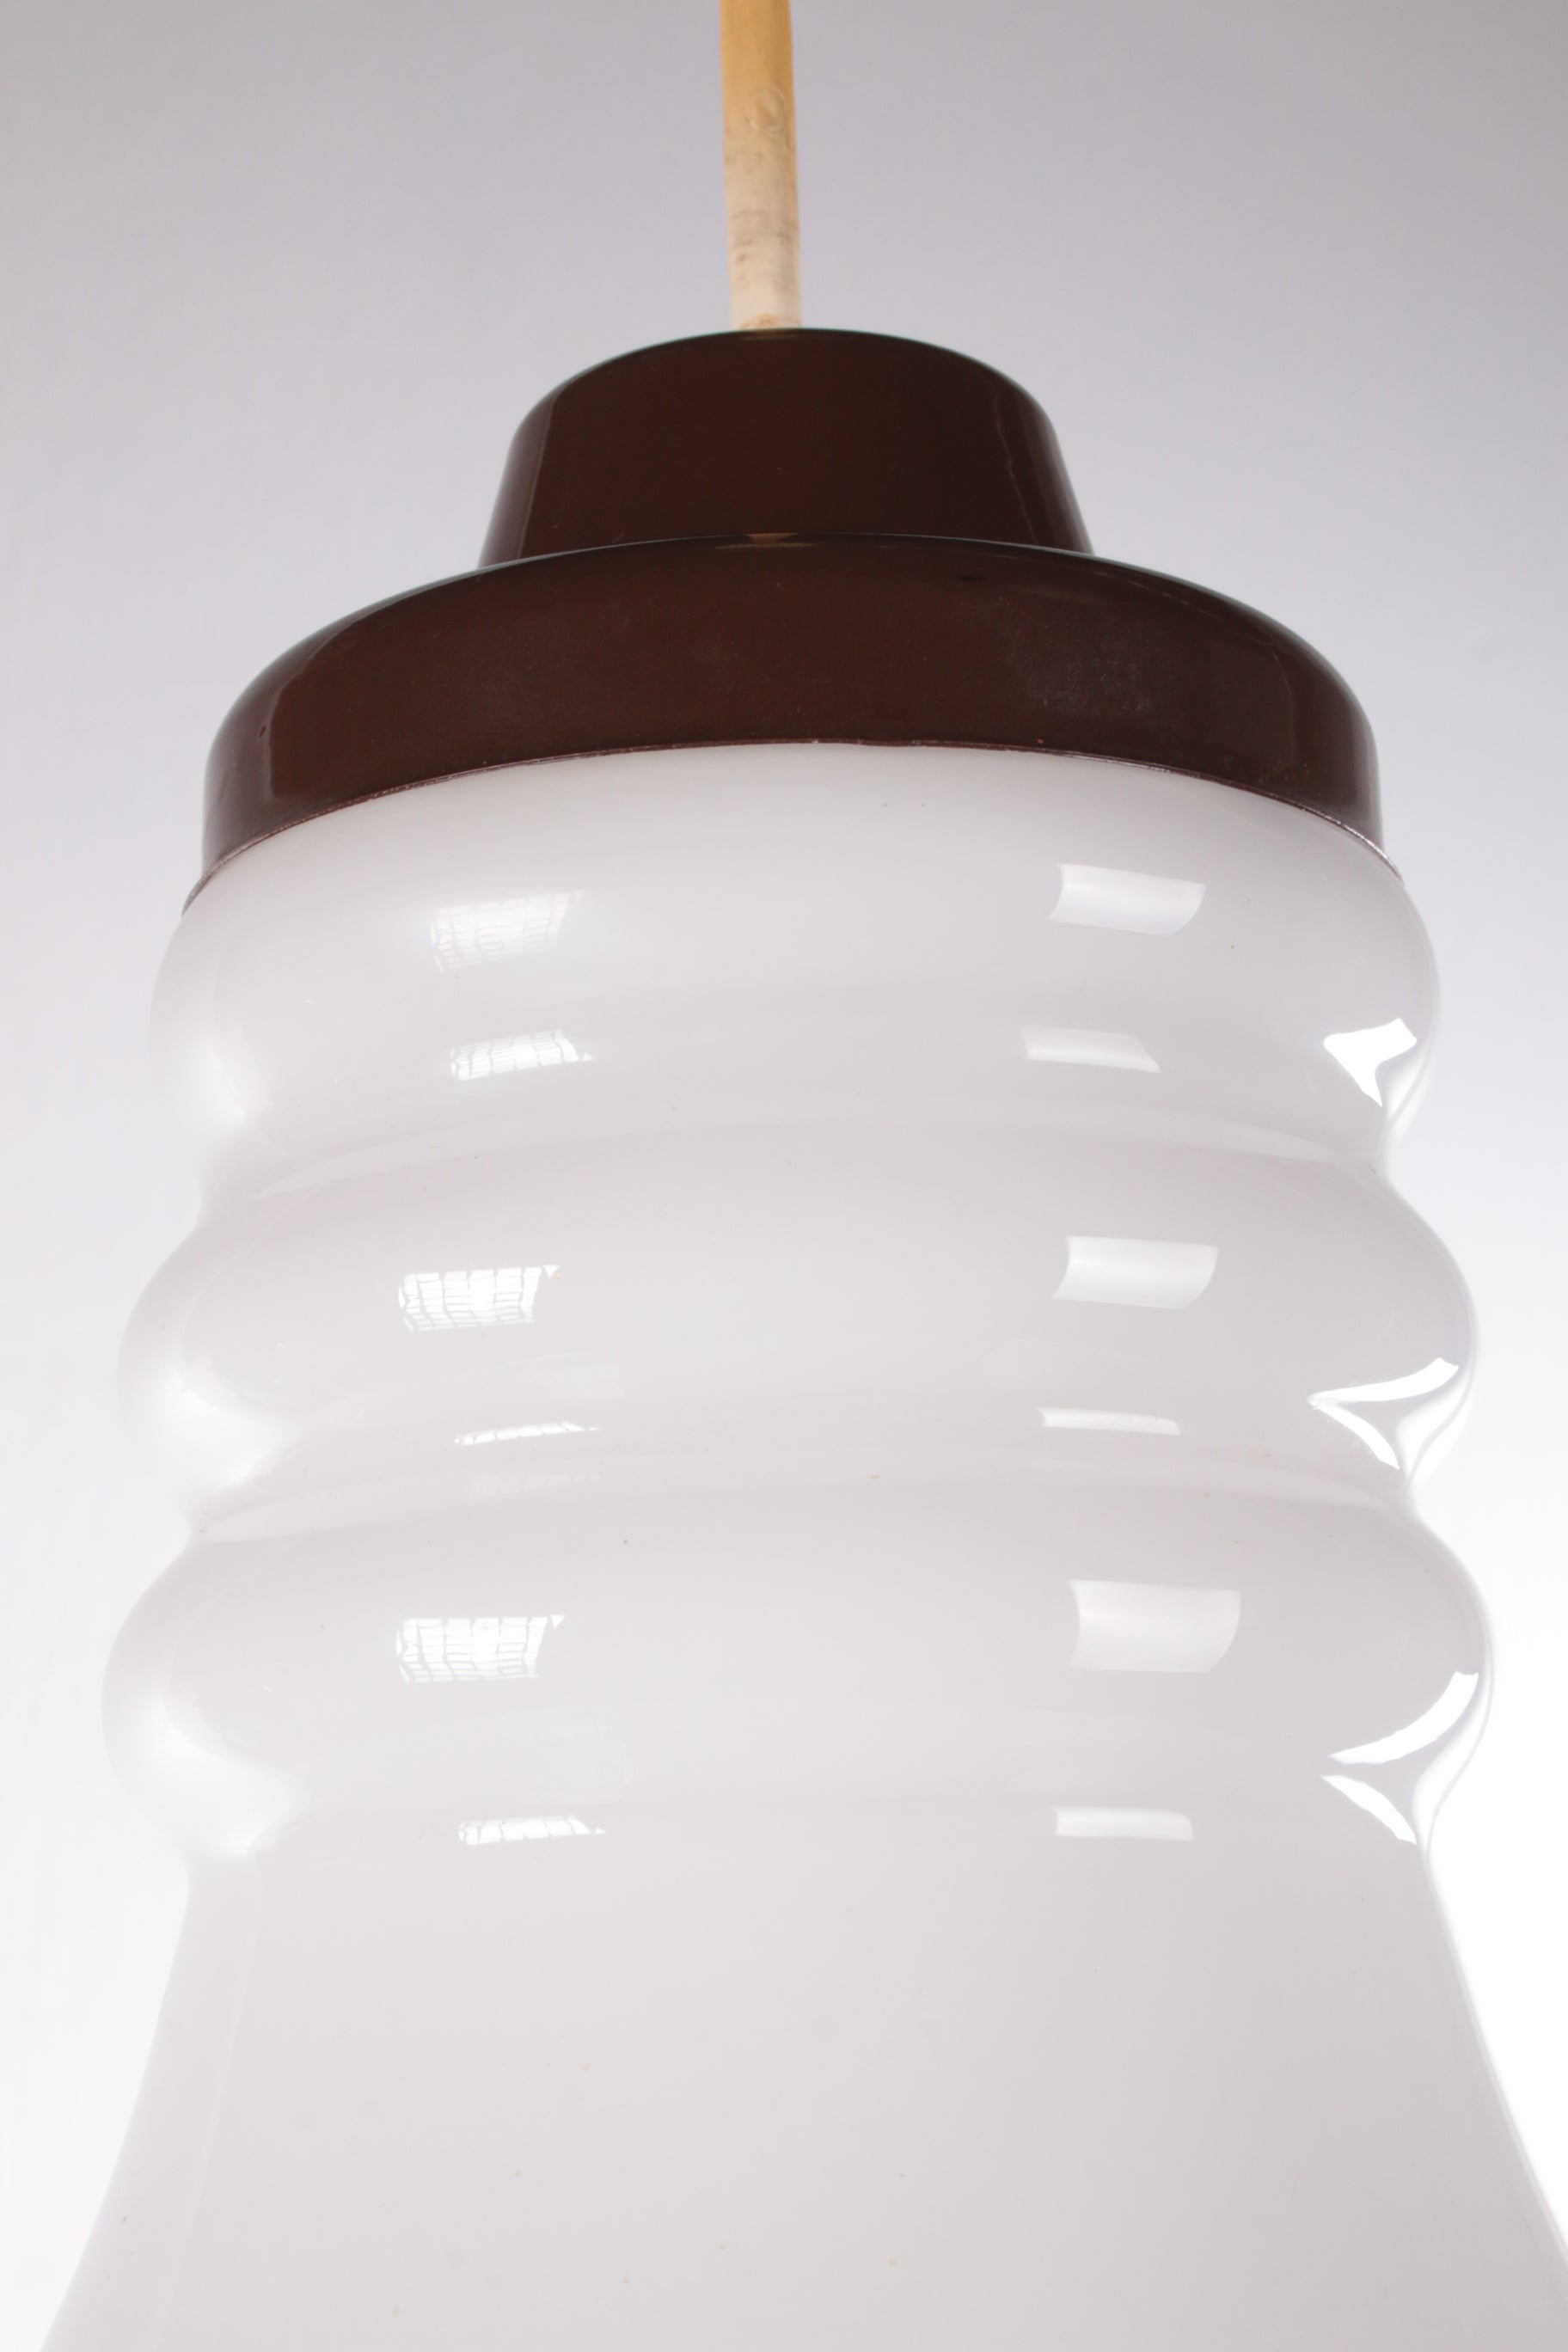 Vintage witte glazen hanglamp detailfoto bovenkant